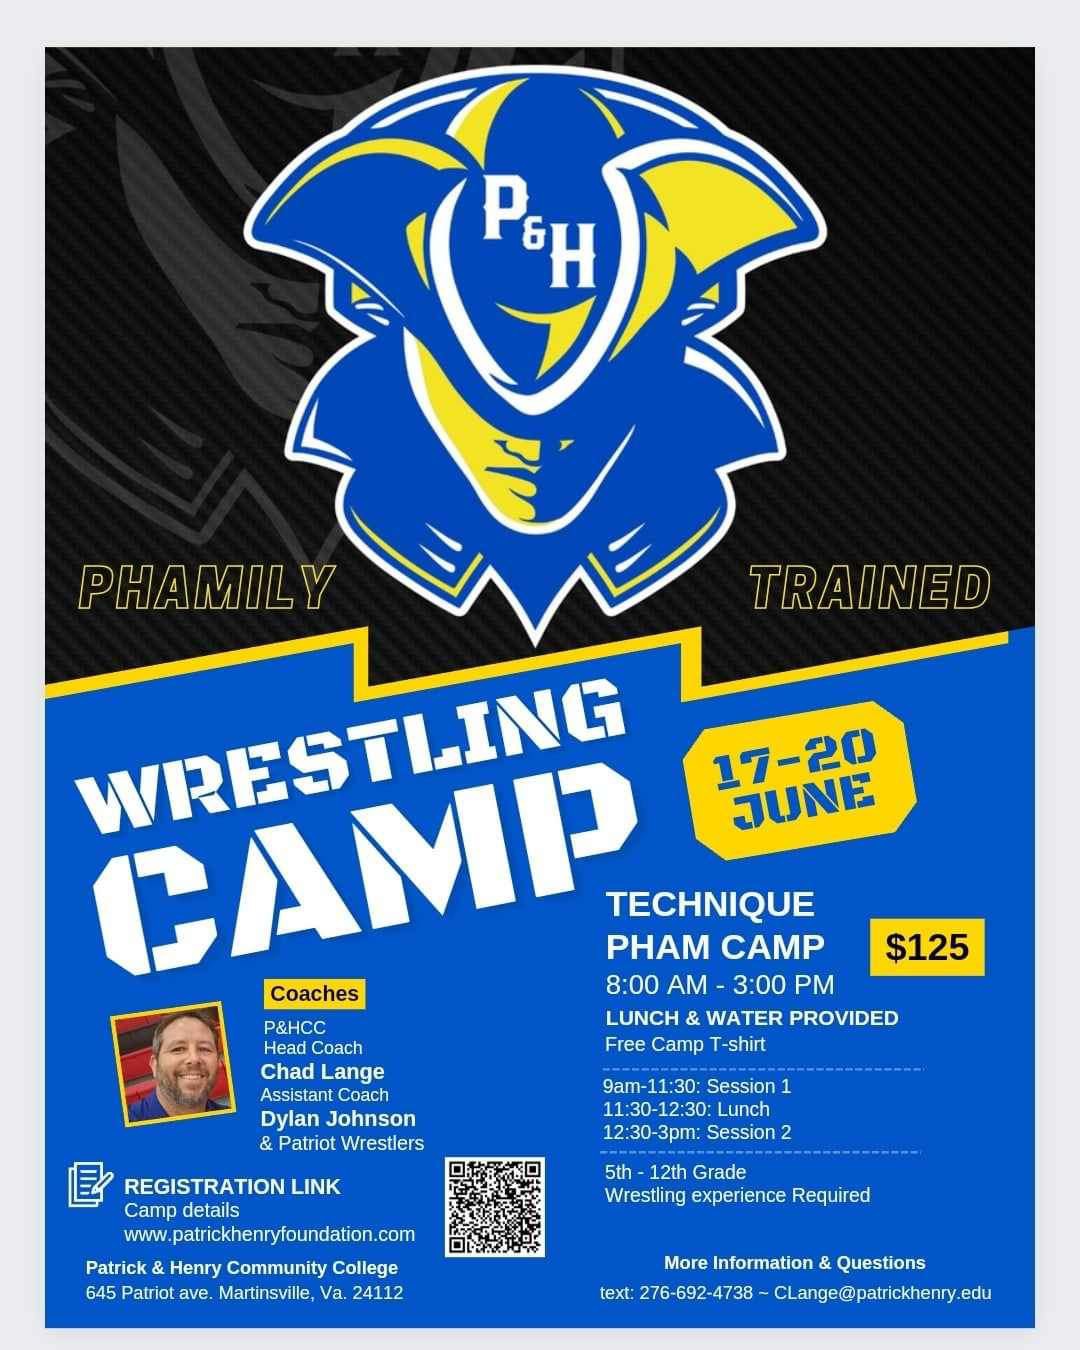 P&amp;HCC Wrestling Camp Set for June 17-20